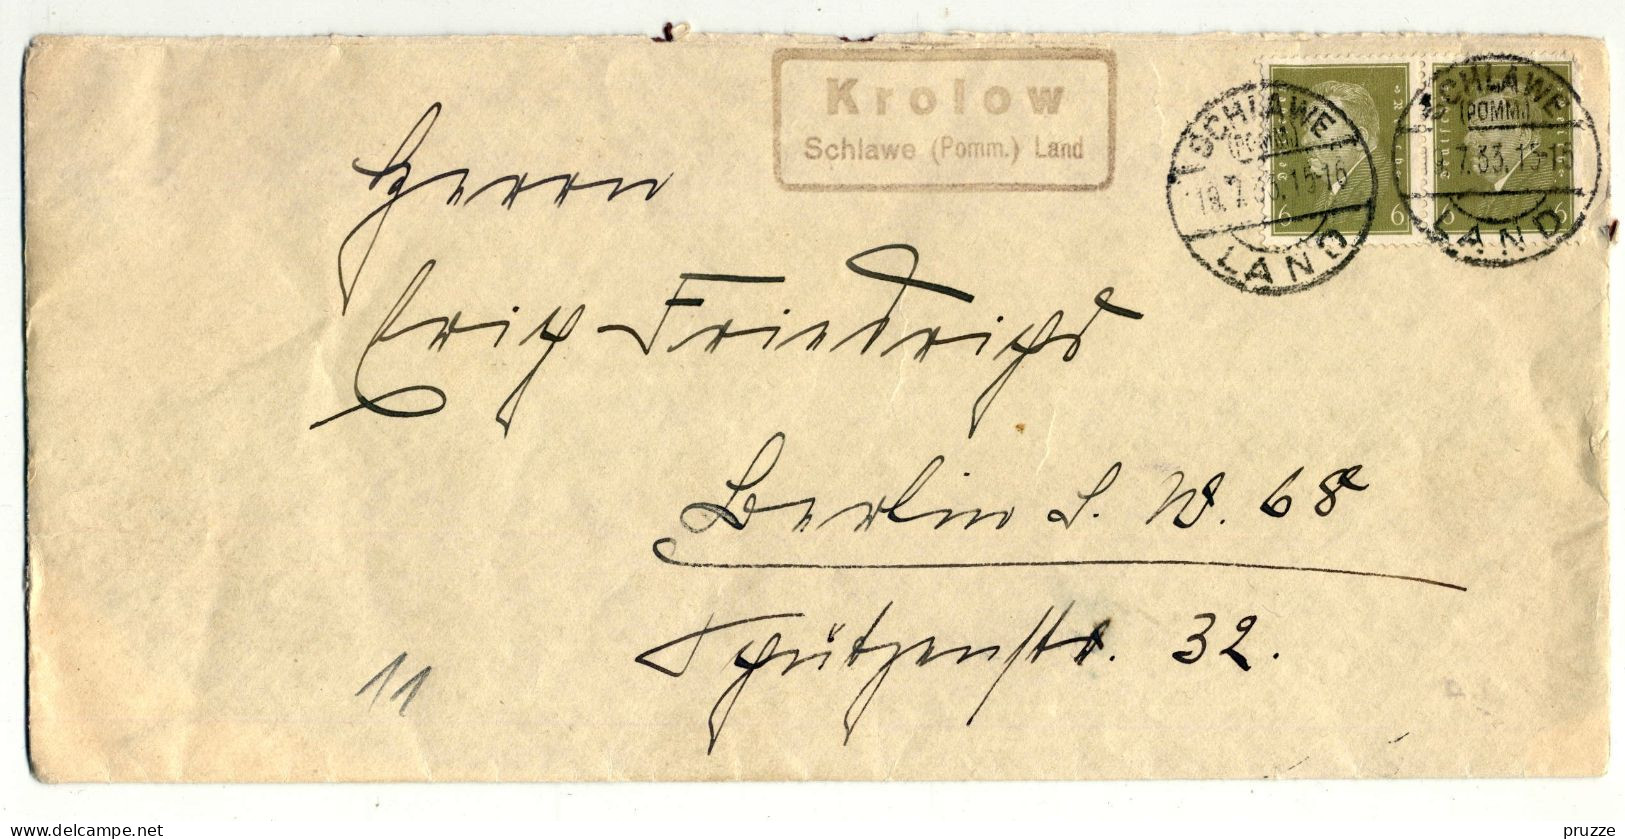 Landpoststempel Krolow, Schlawe (Pomm.) Land 1933 - Buste